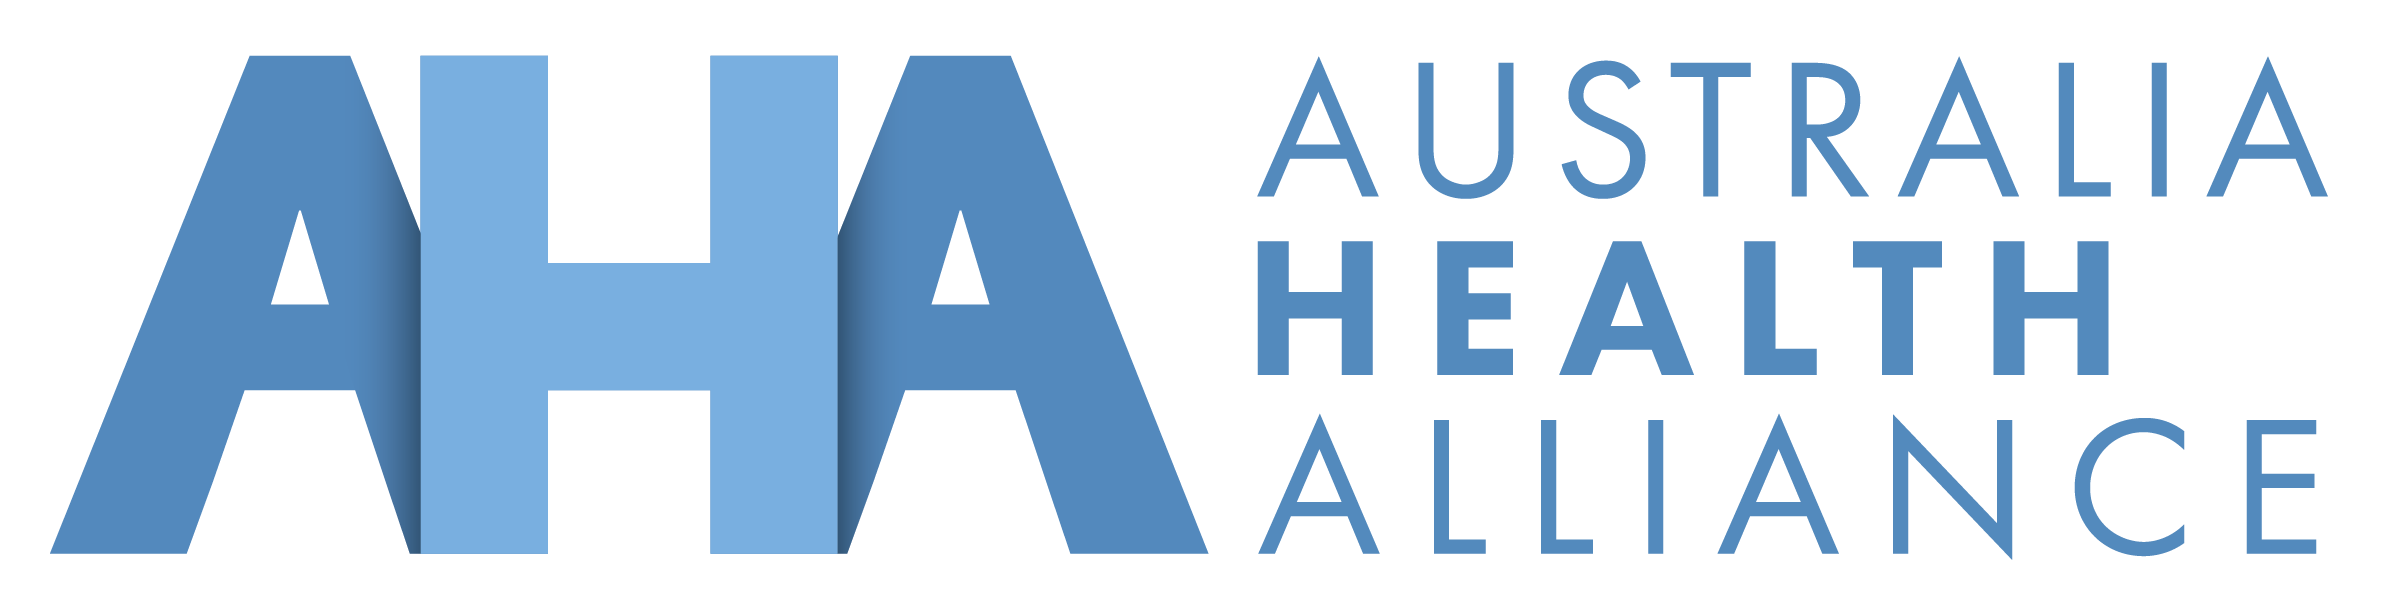 Australia Health Alliance Logo